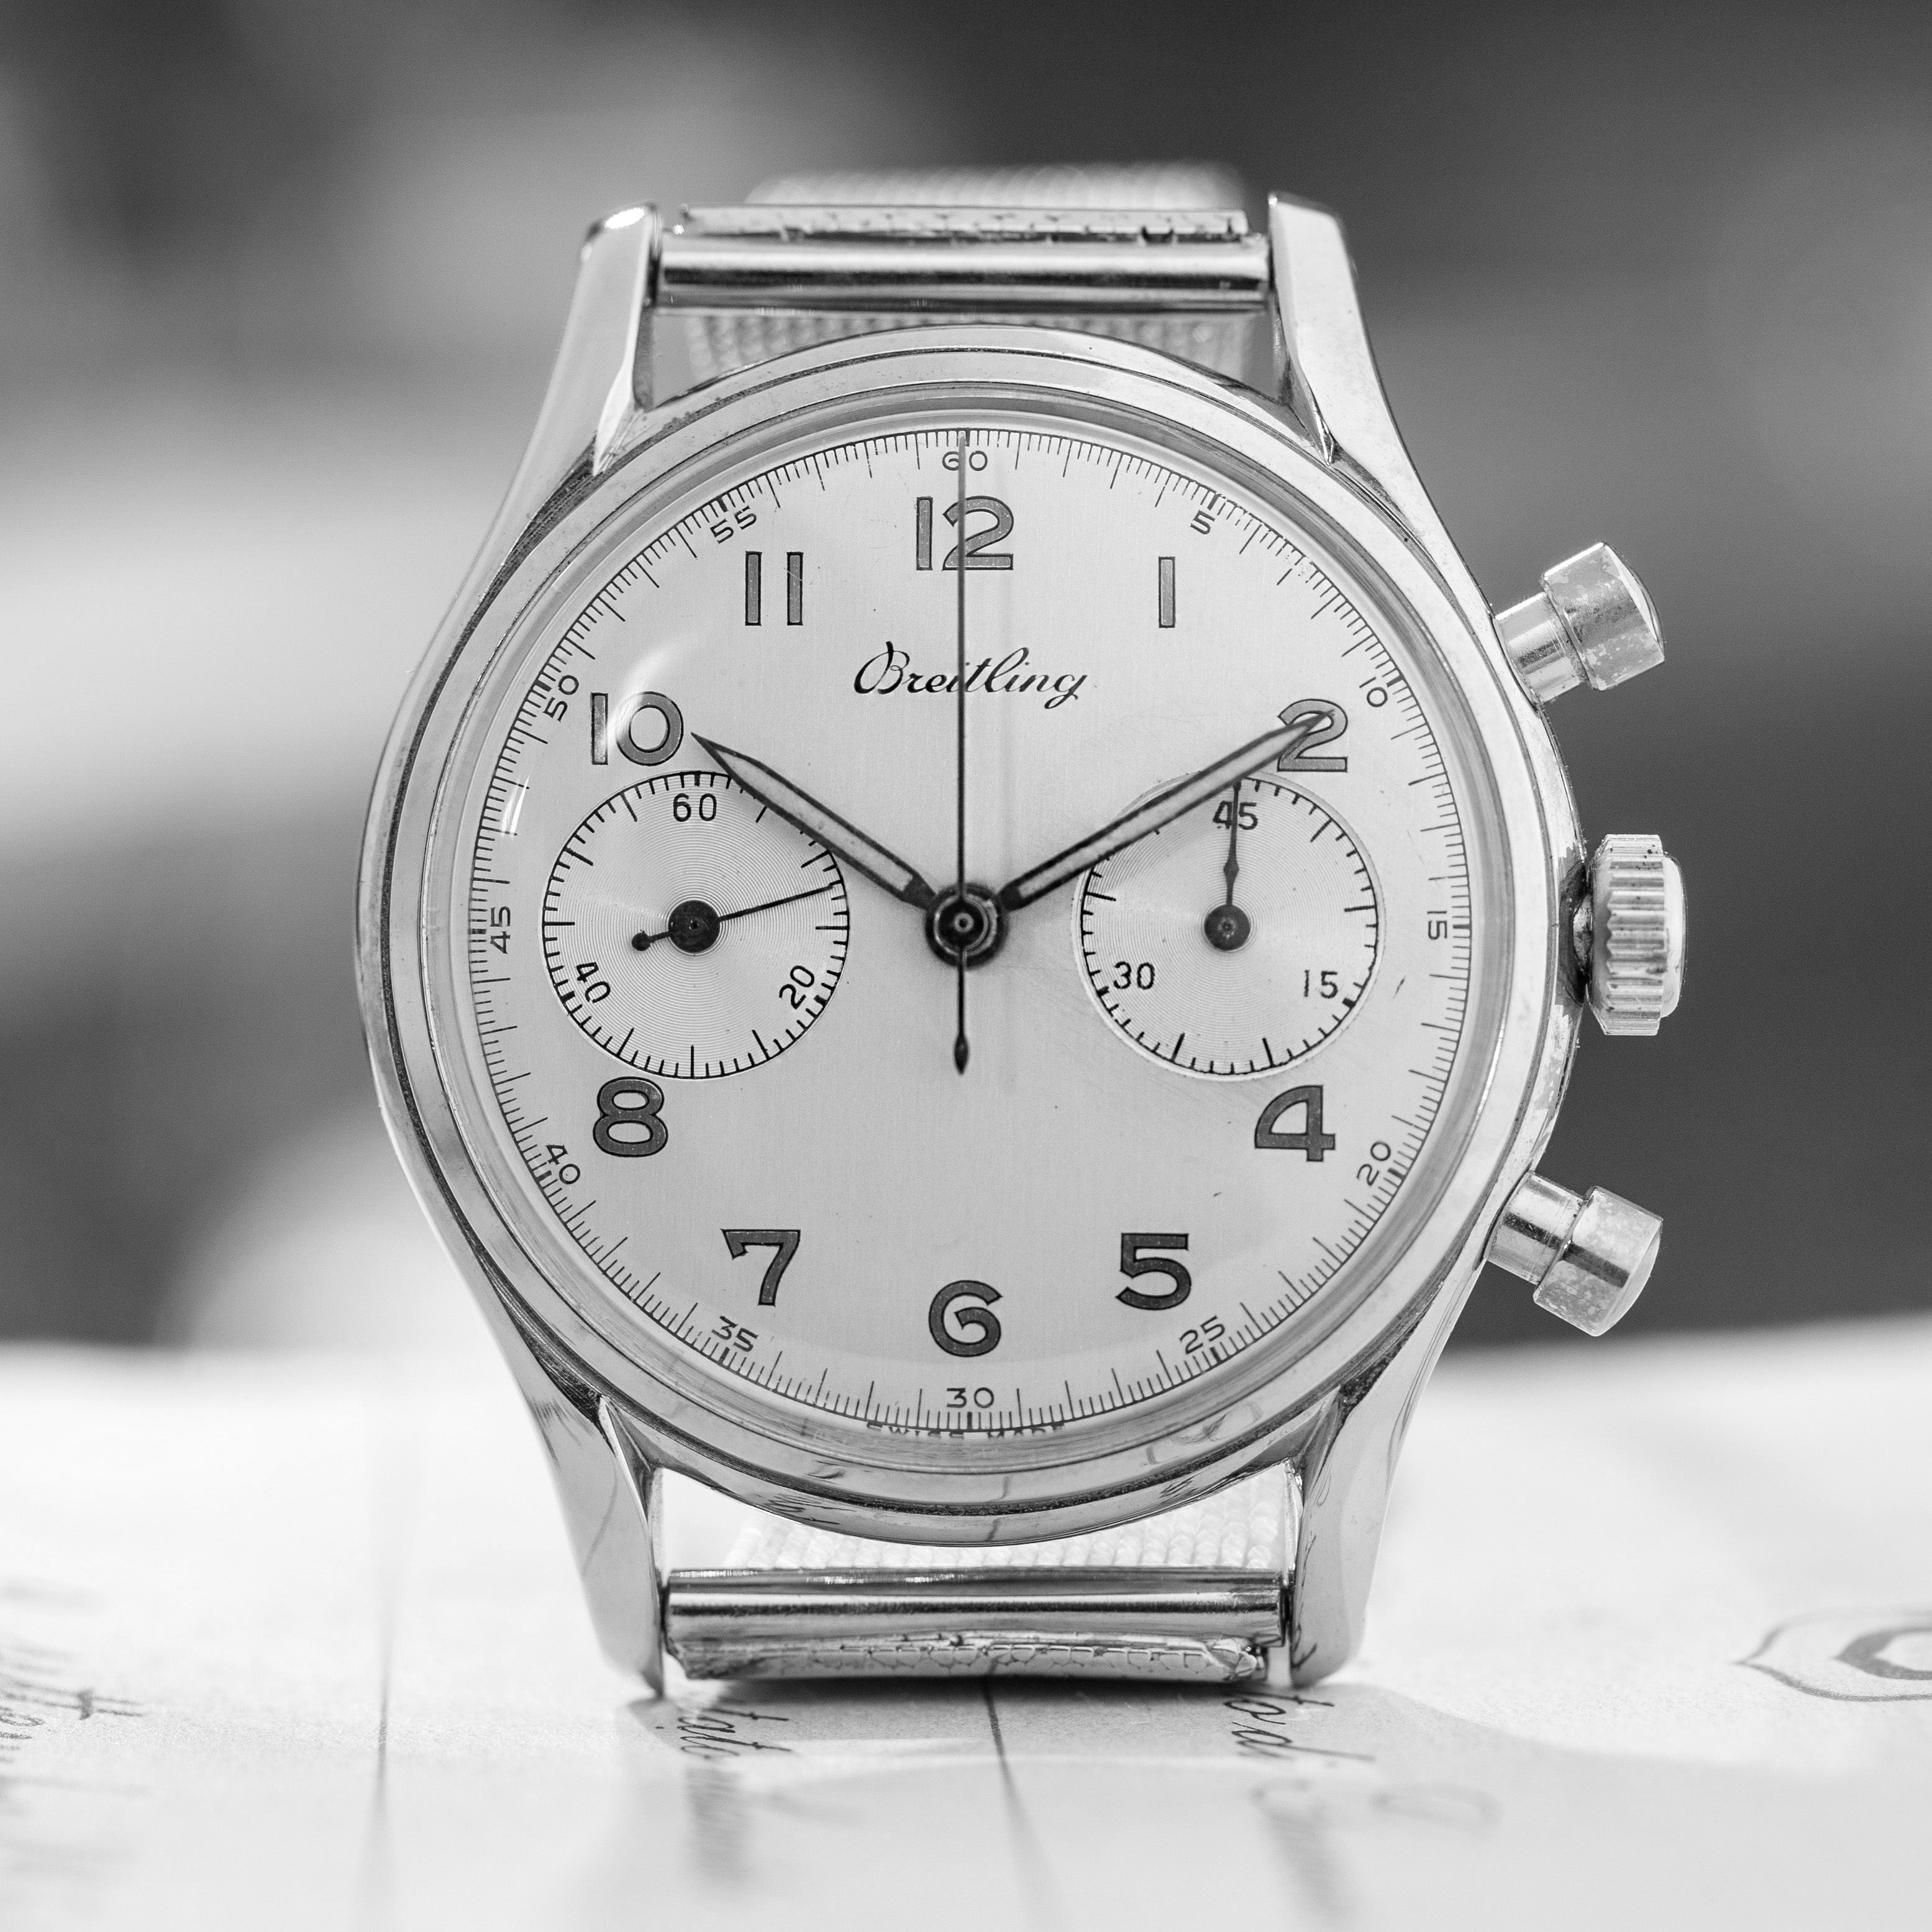 Breitling chronograph ref. 777